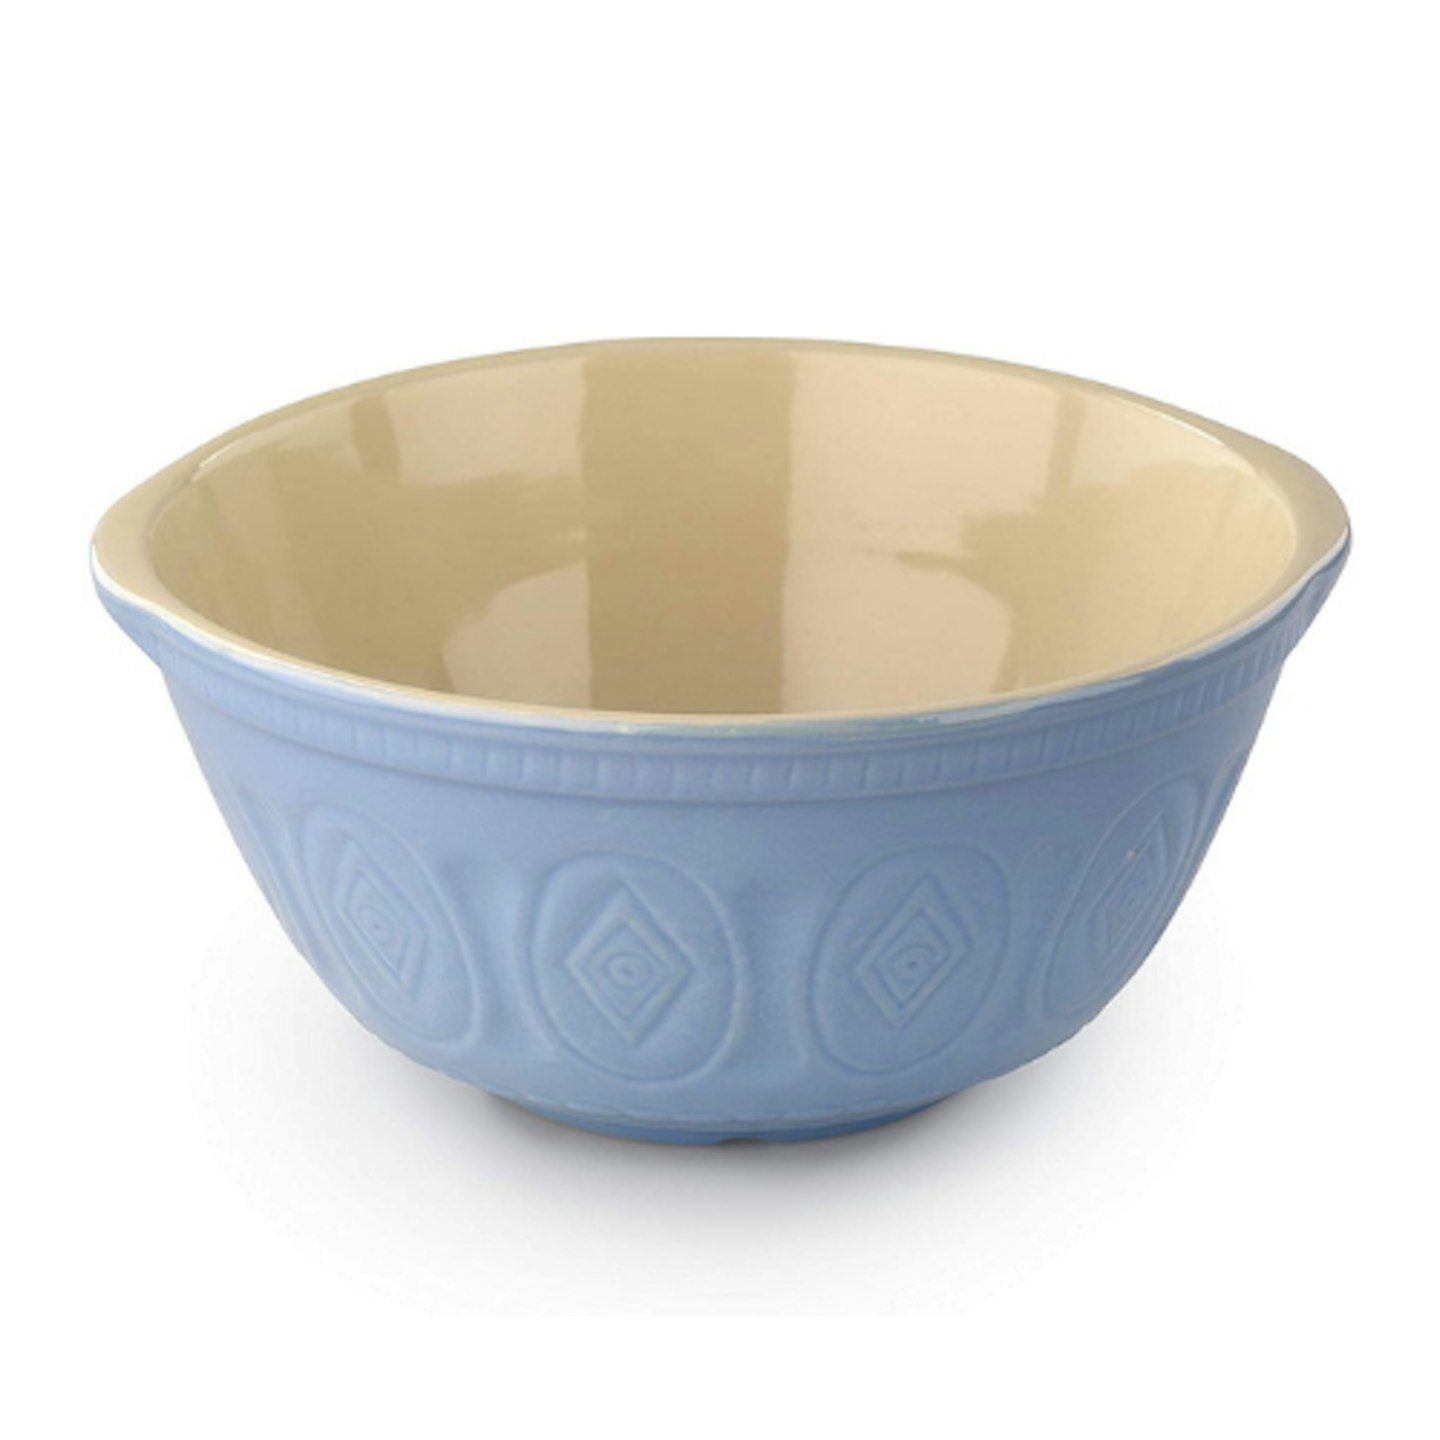 Tala Traditional Ceramic Stoneware Mixing Bowl on a white background.